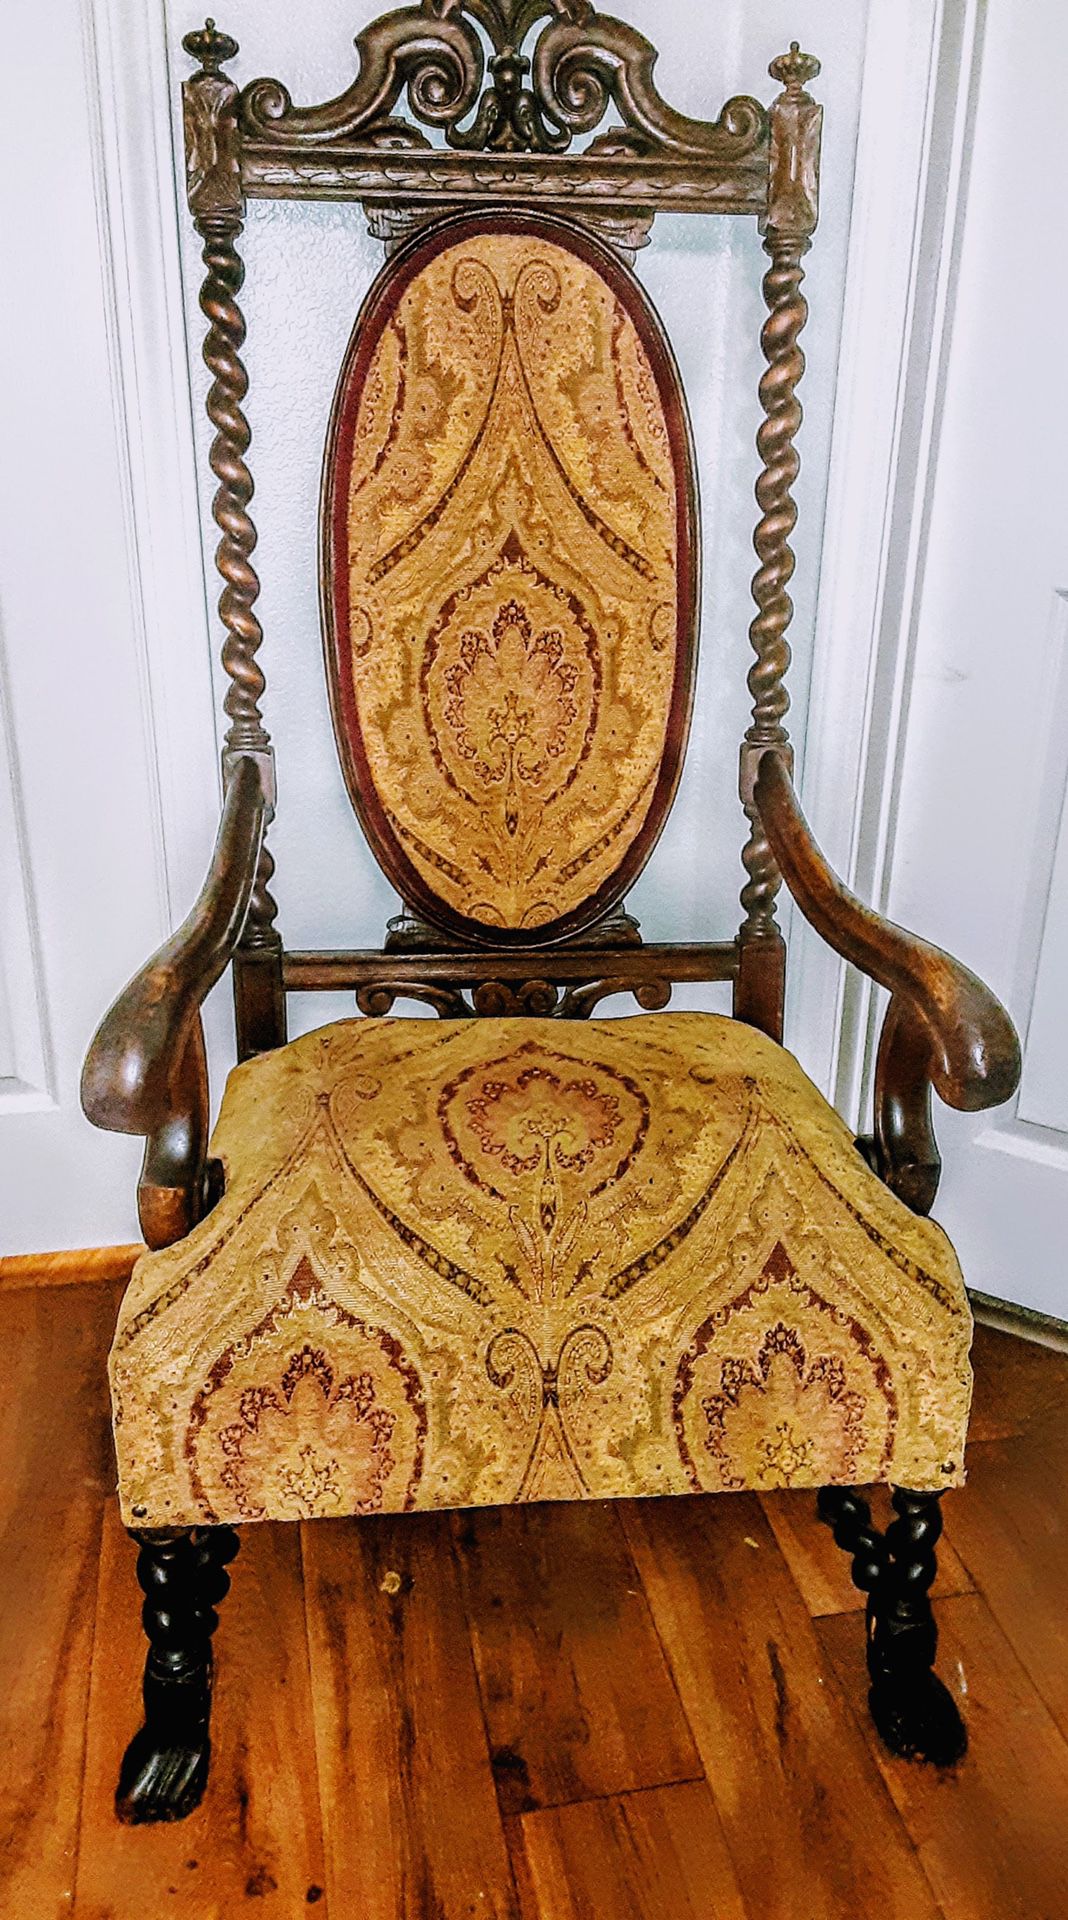 Original throne Antique Chair, Twisted Legs, Original Woven Material.